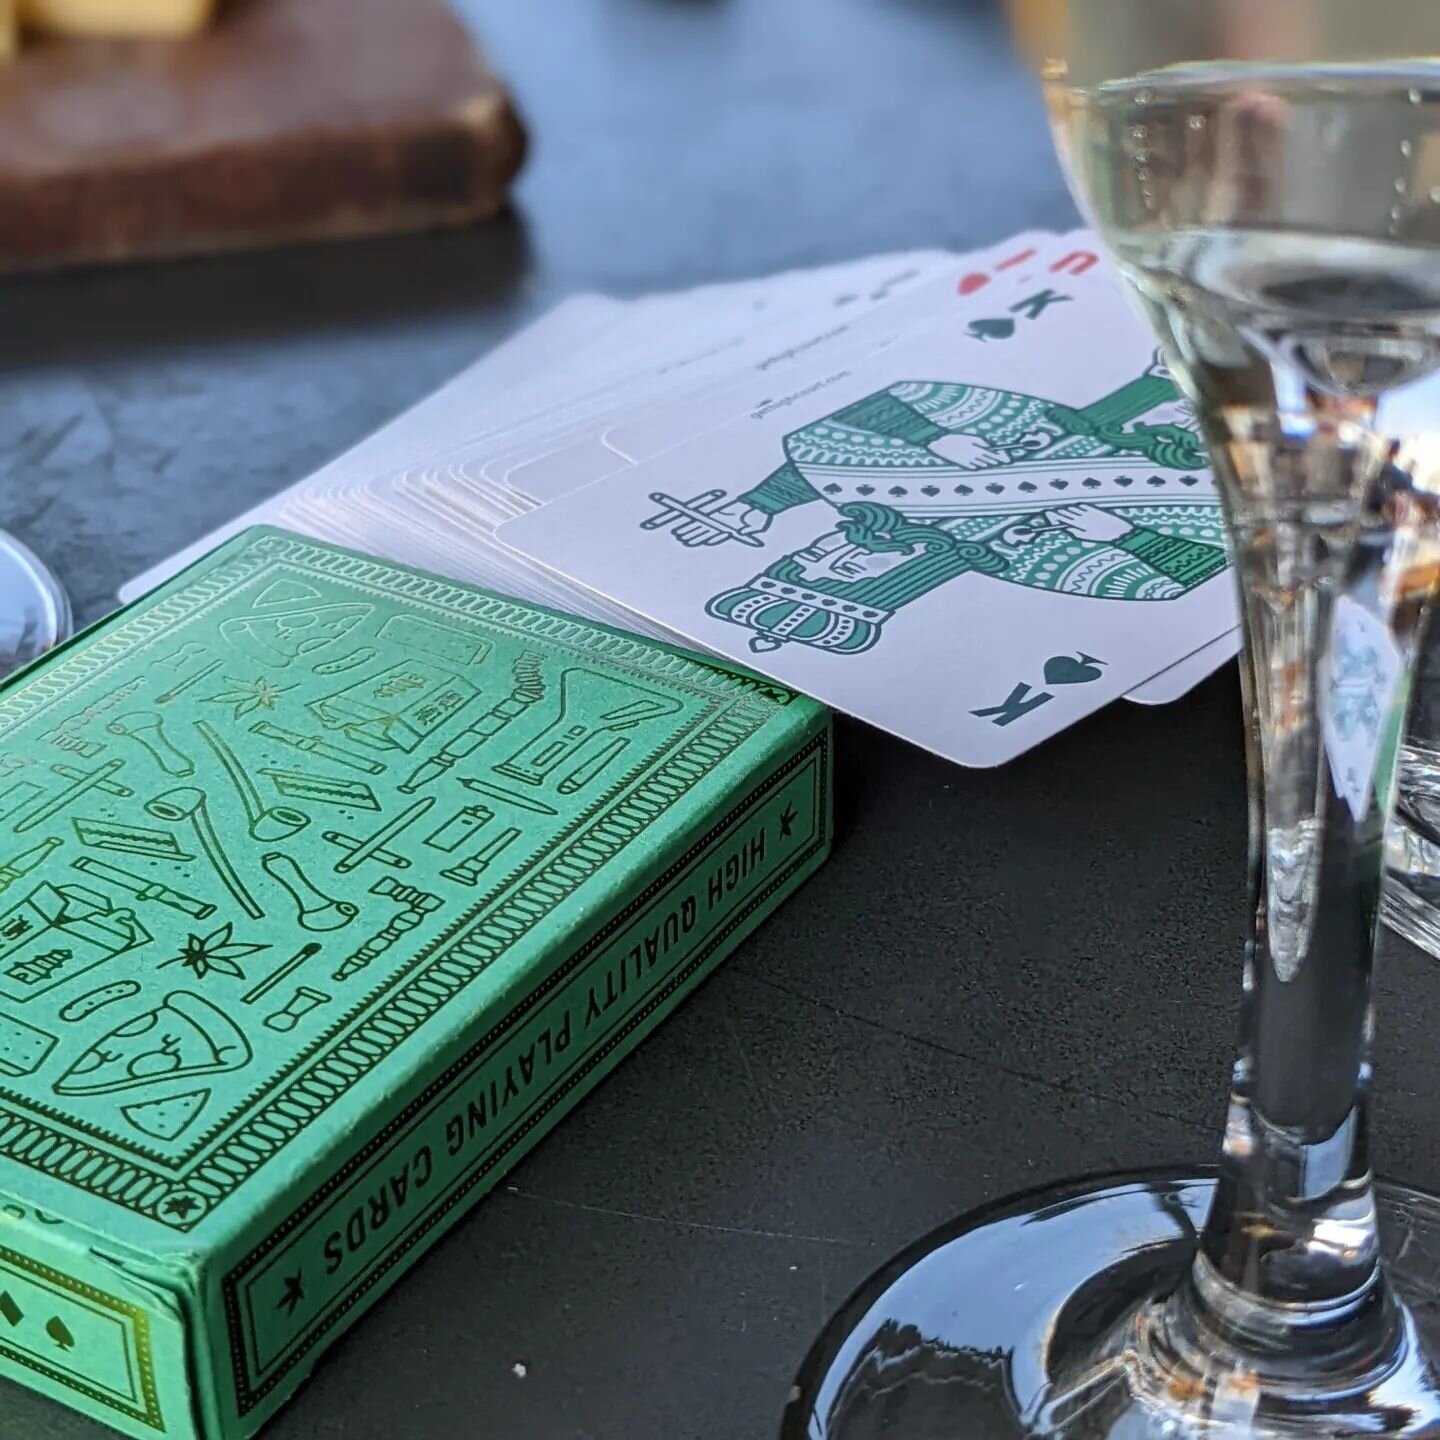 High Royals at Happy Hour!
Get your deck today! gethighcourt.com

#420life #cannabislife #cannabisstartups #playingcards #kickstarter #crowdfunding  #creativityoncannabis #stoners #games #happyhour